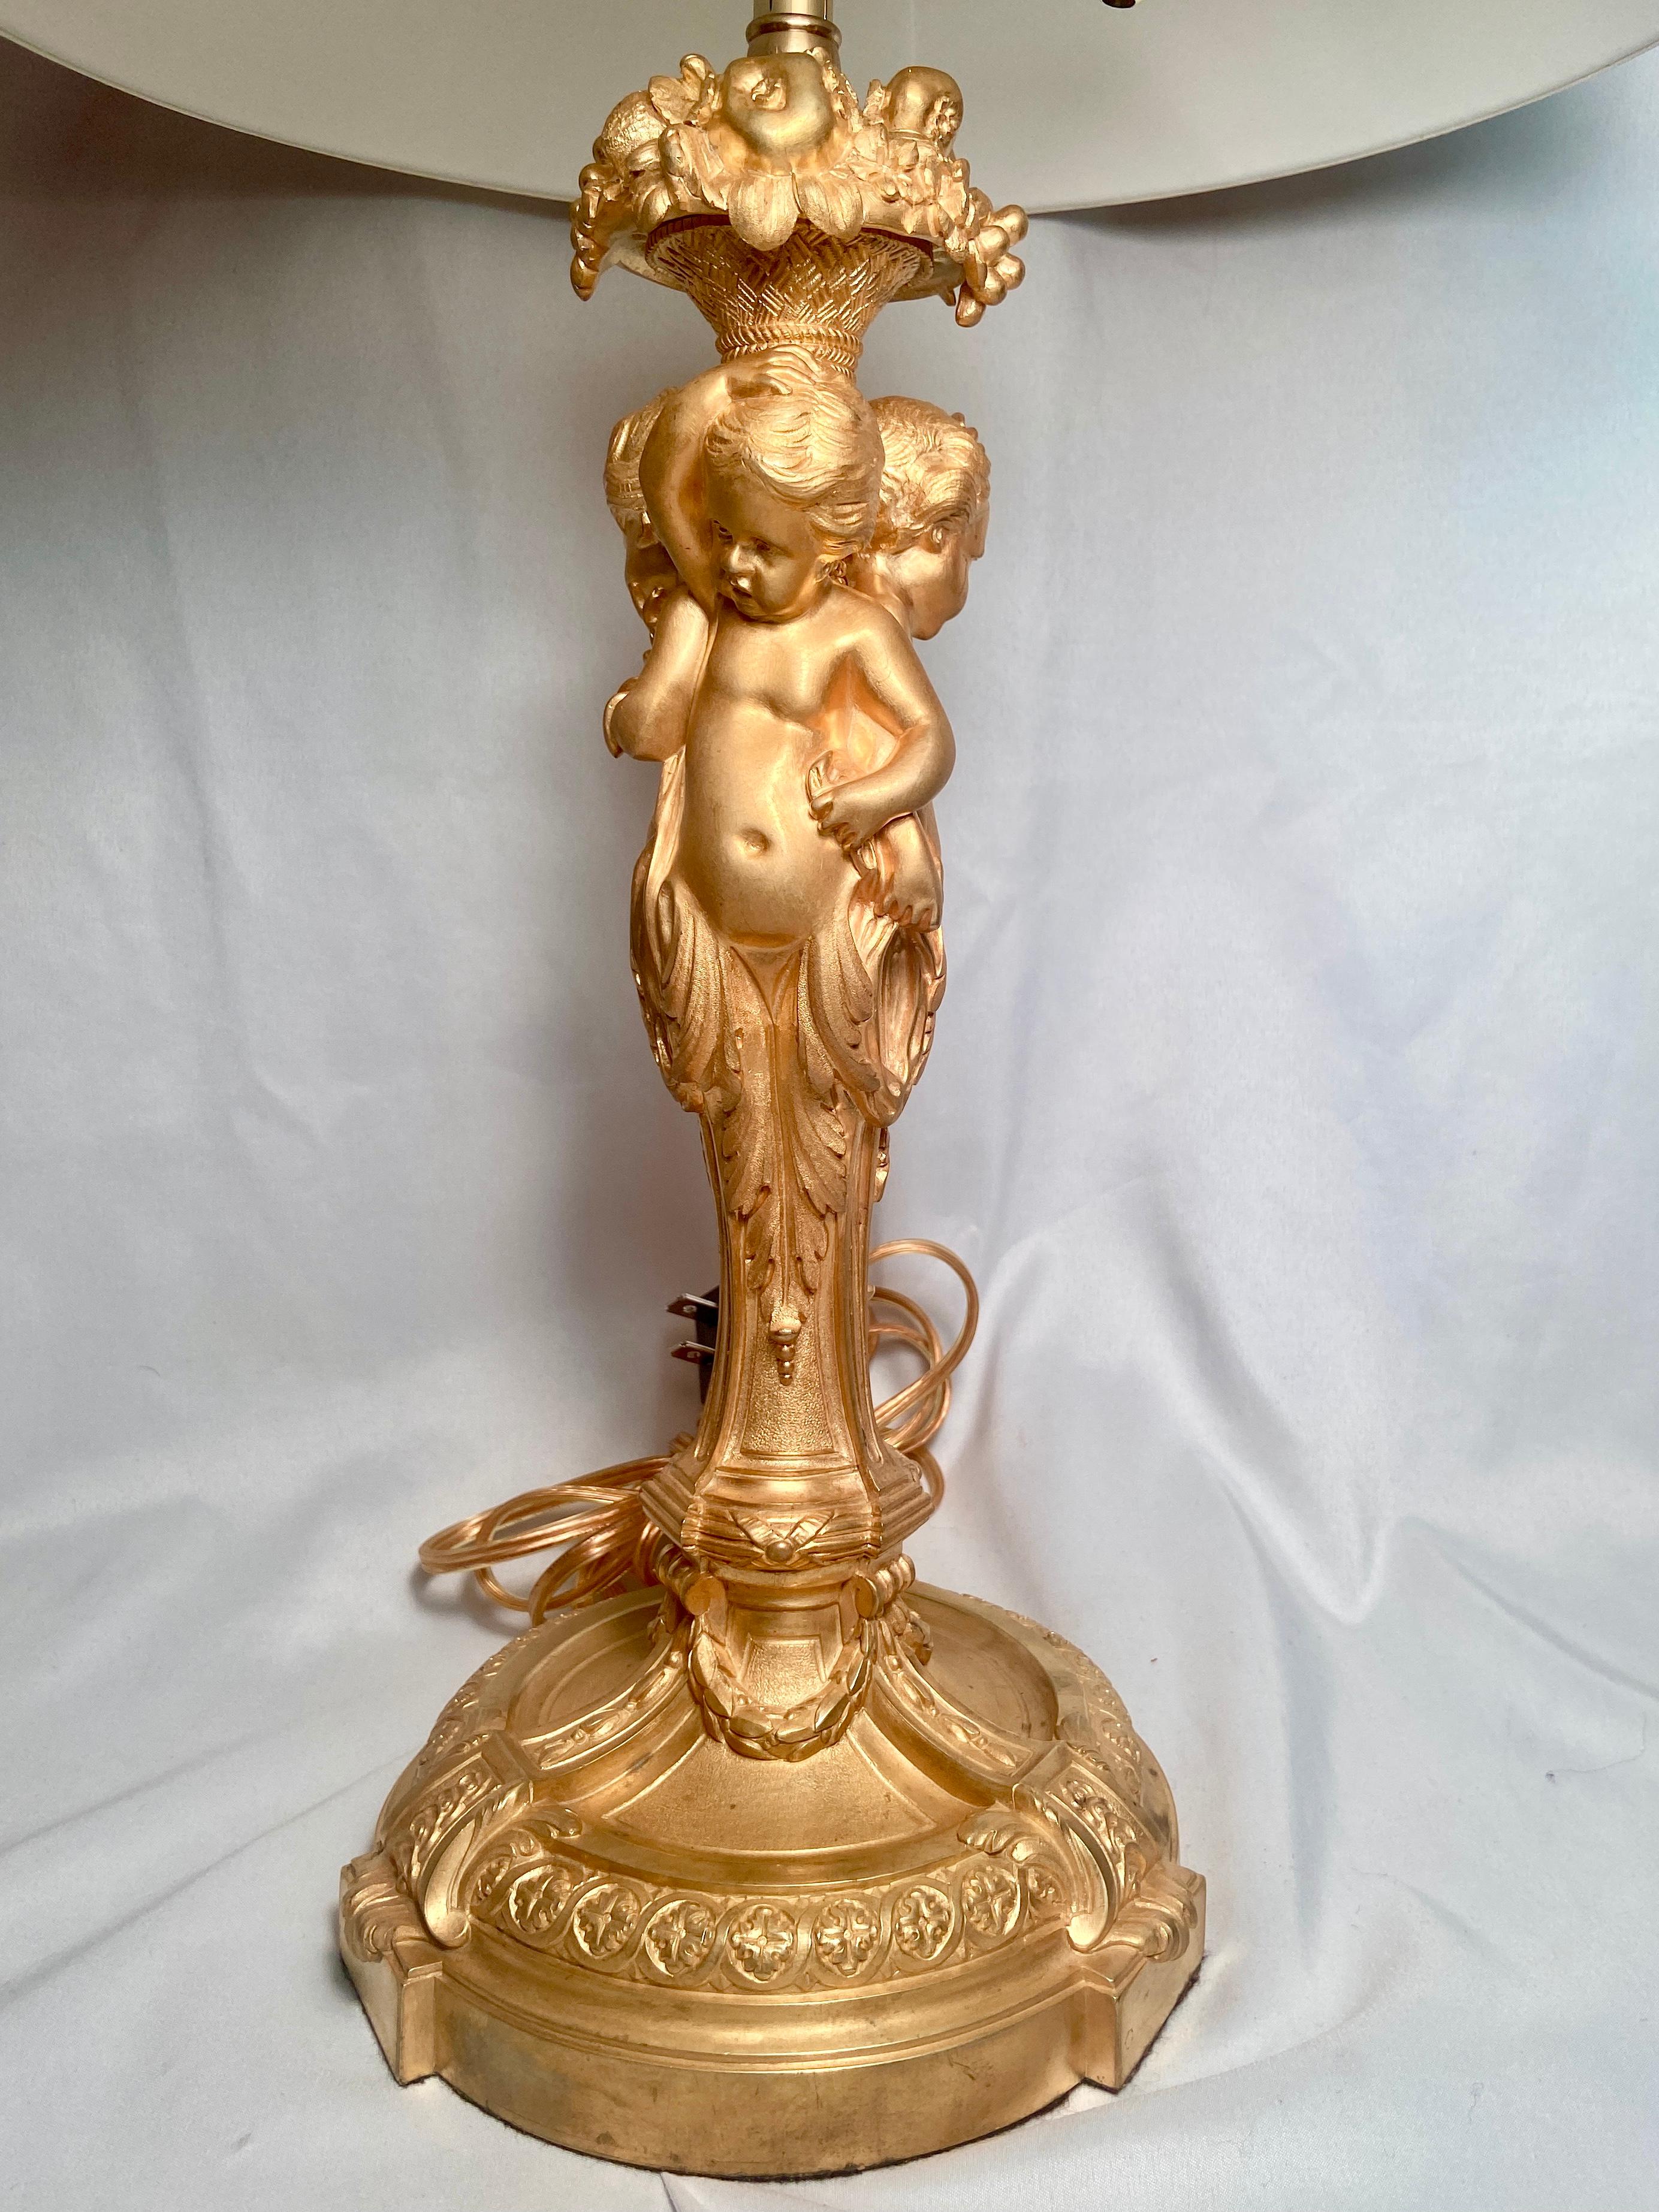 Antique French Napoleon III ormolu figural lamp with cherubs, Circa 1855-1875.